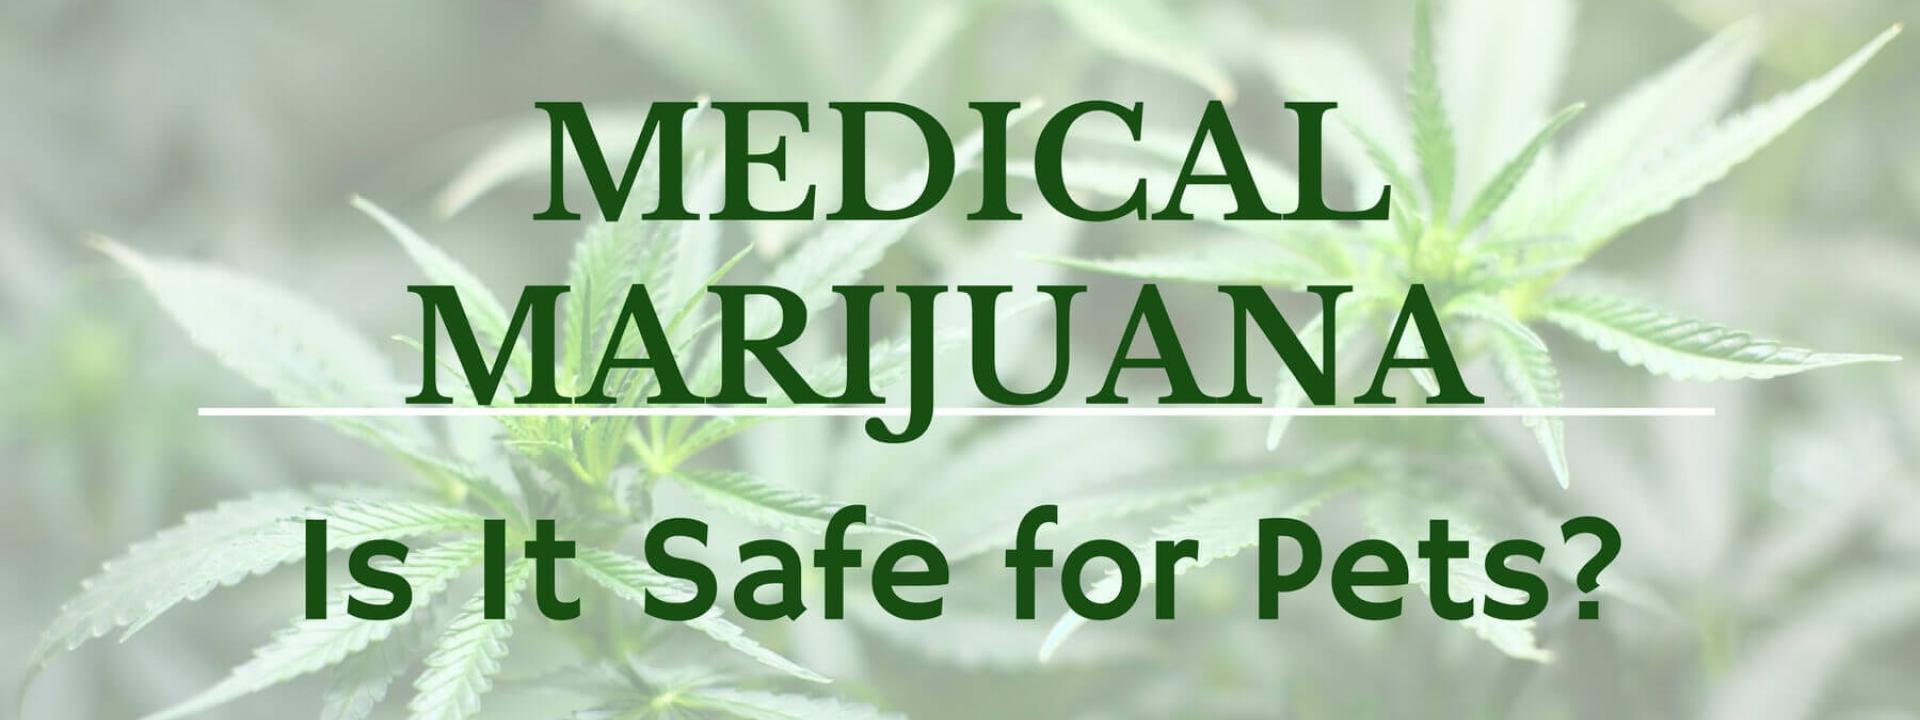 title-medical-marijuana-pets.jpg